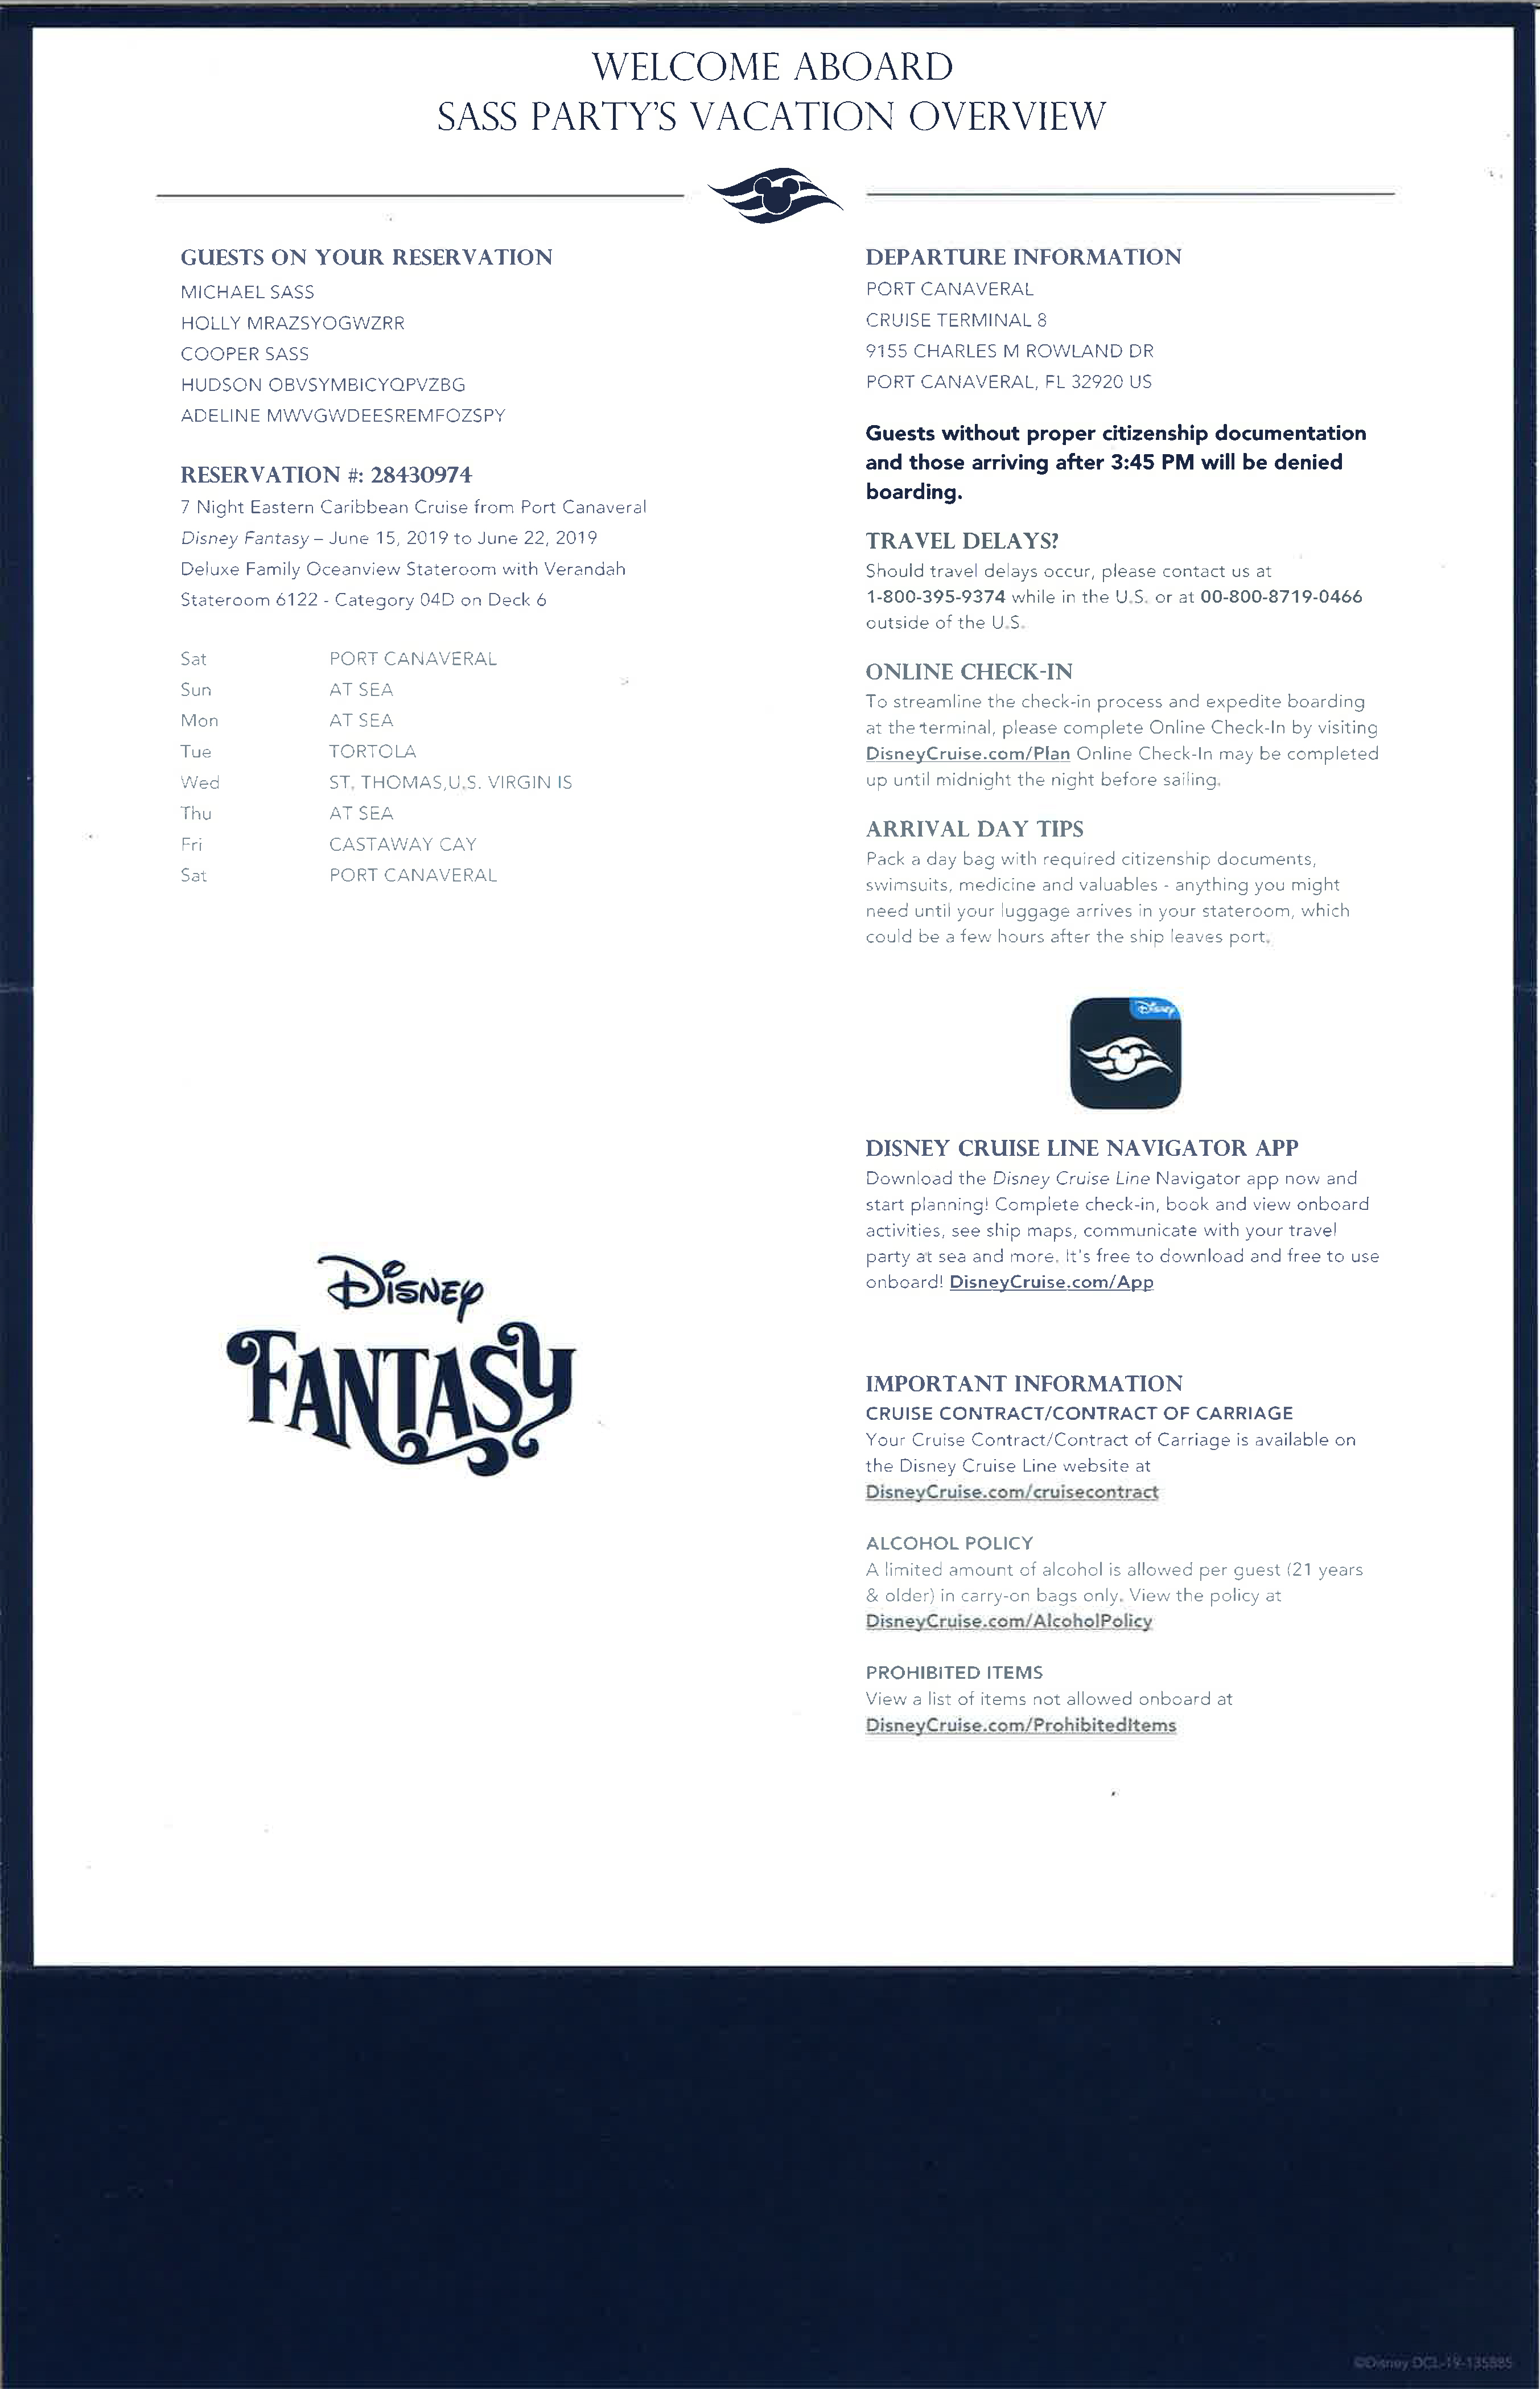 Disney Cruise Pre-Cruise documents